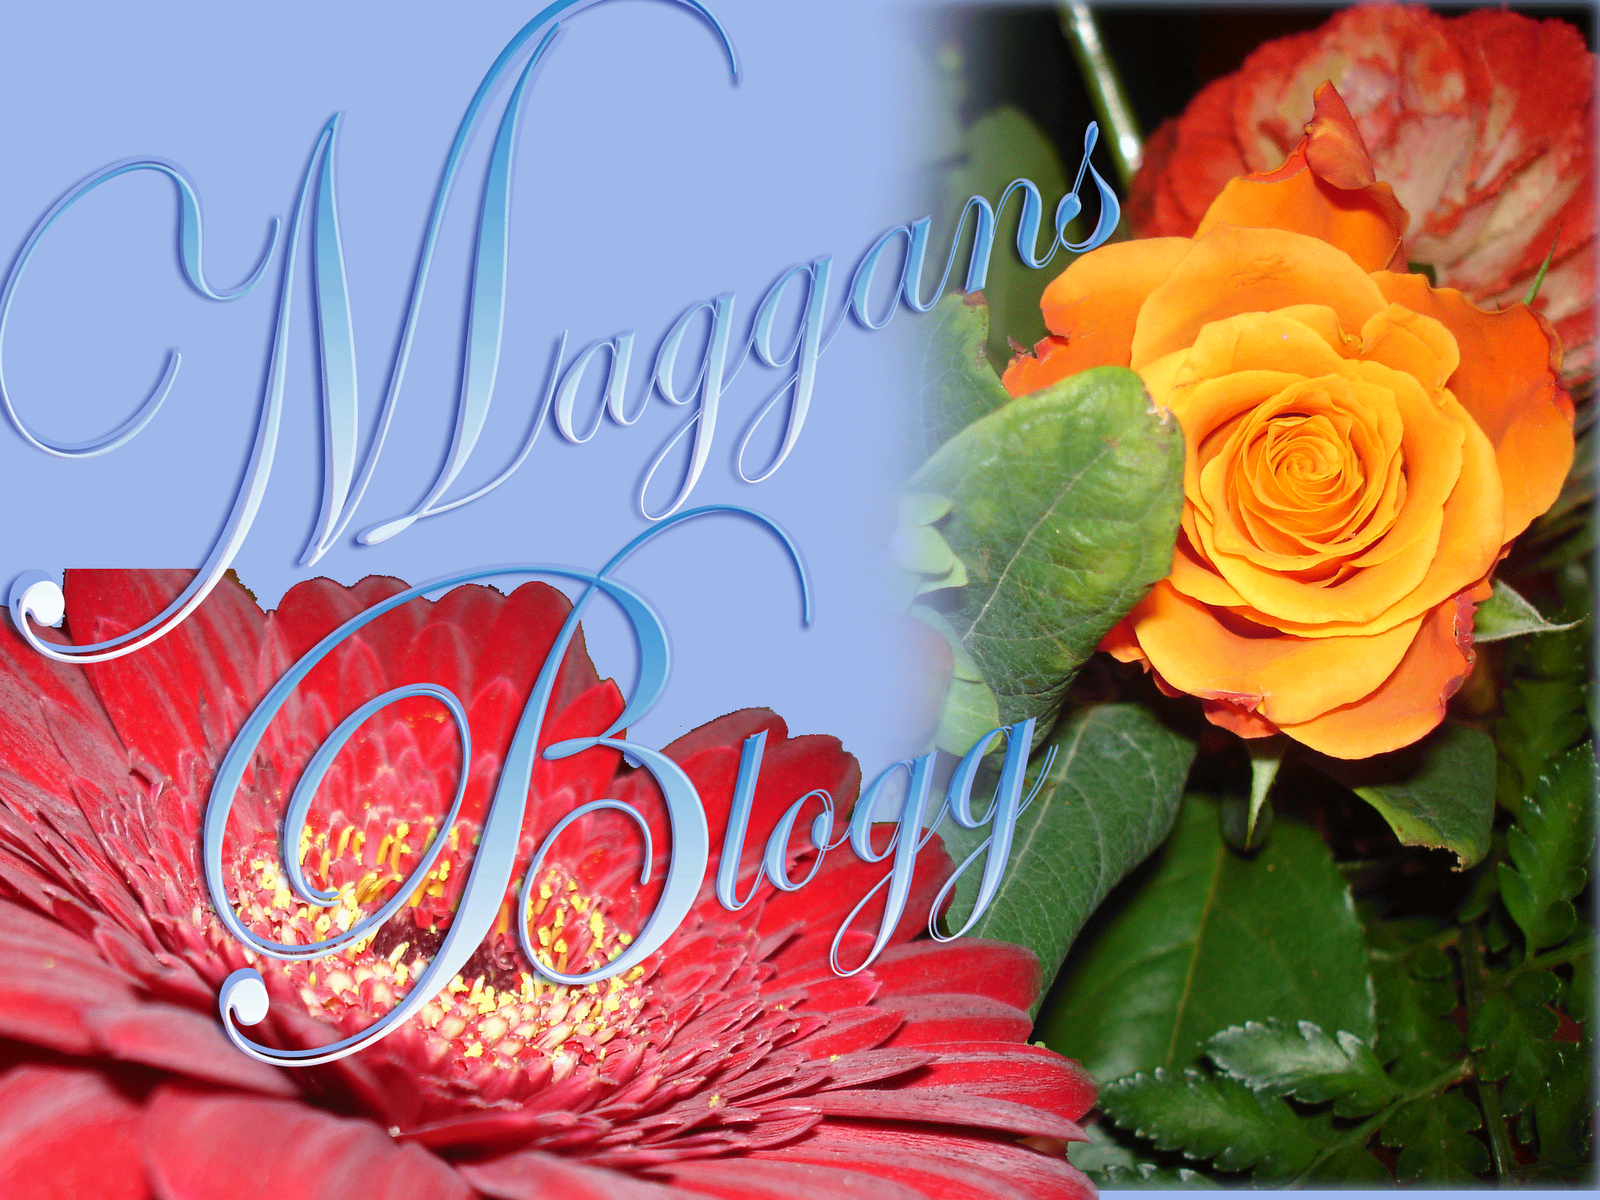 Maggans blogg